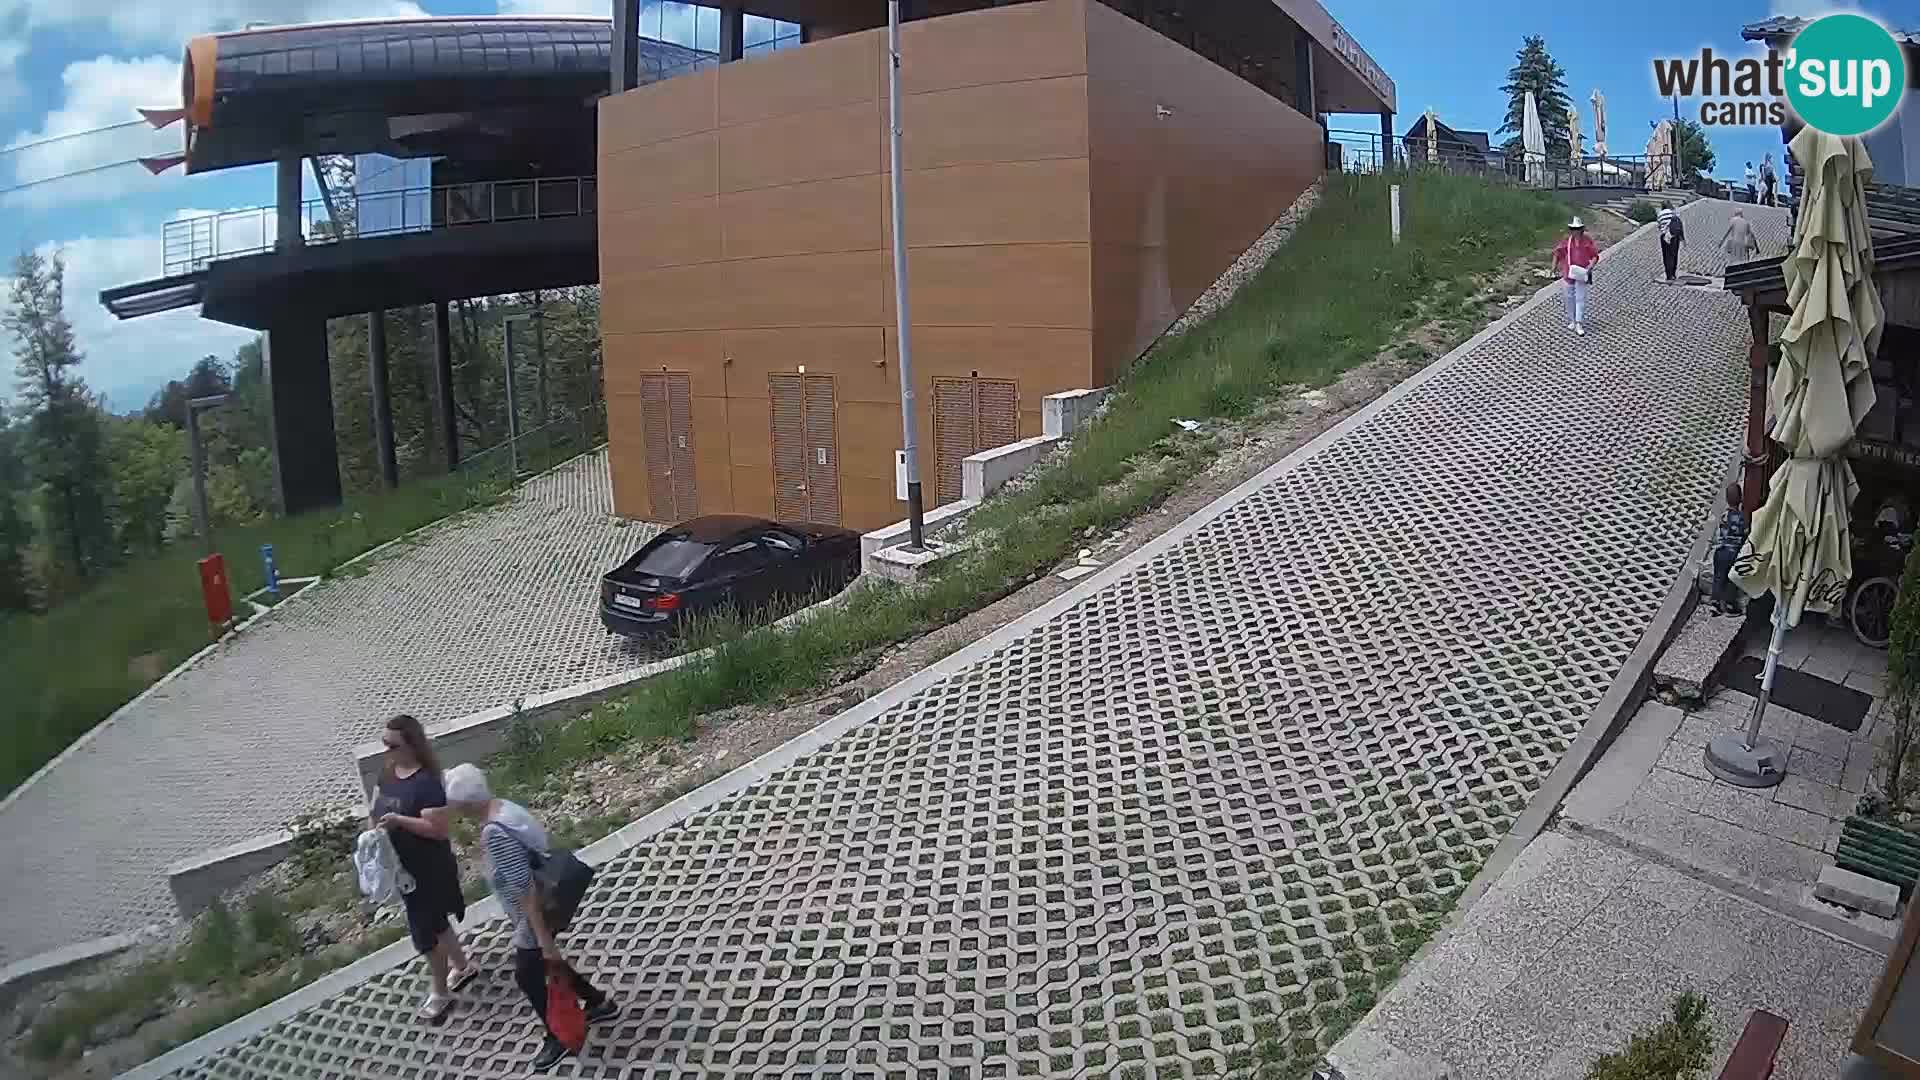 Sljeme – Ski-Zentrum in der Nähe von Zagreb